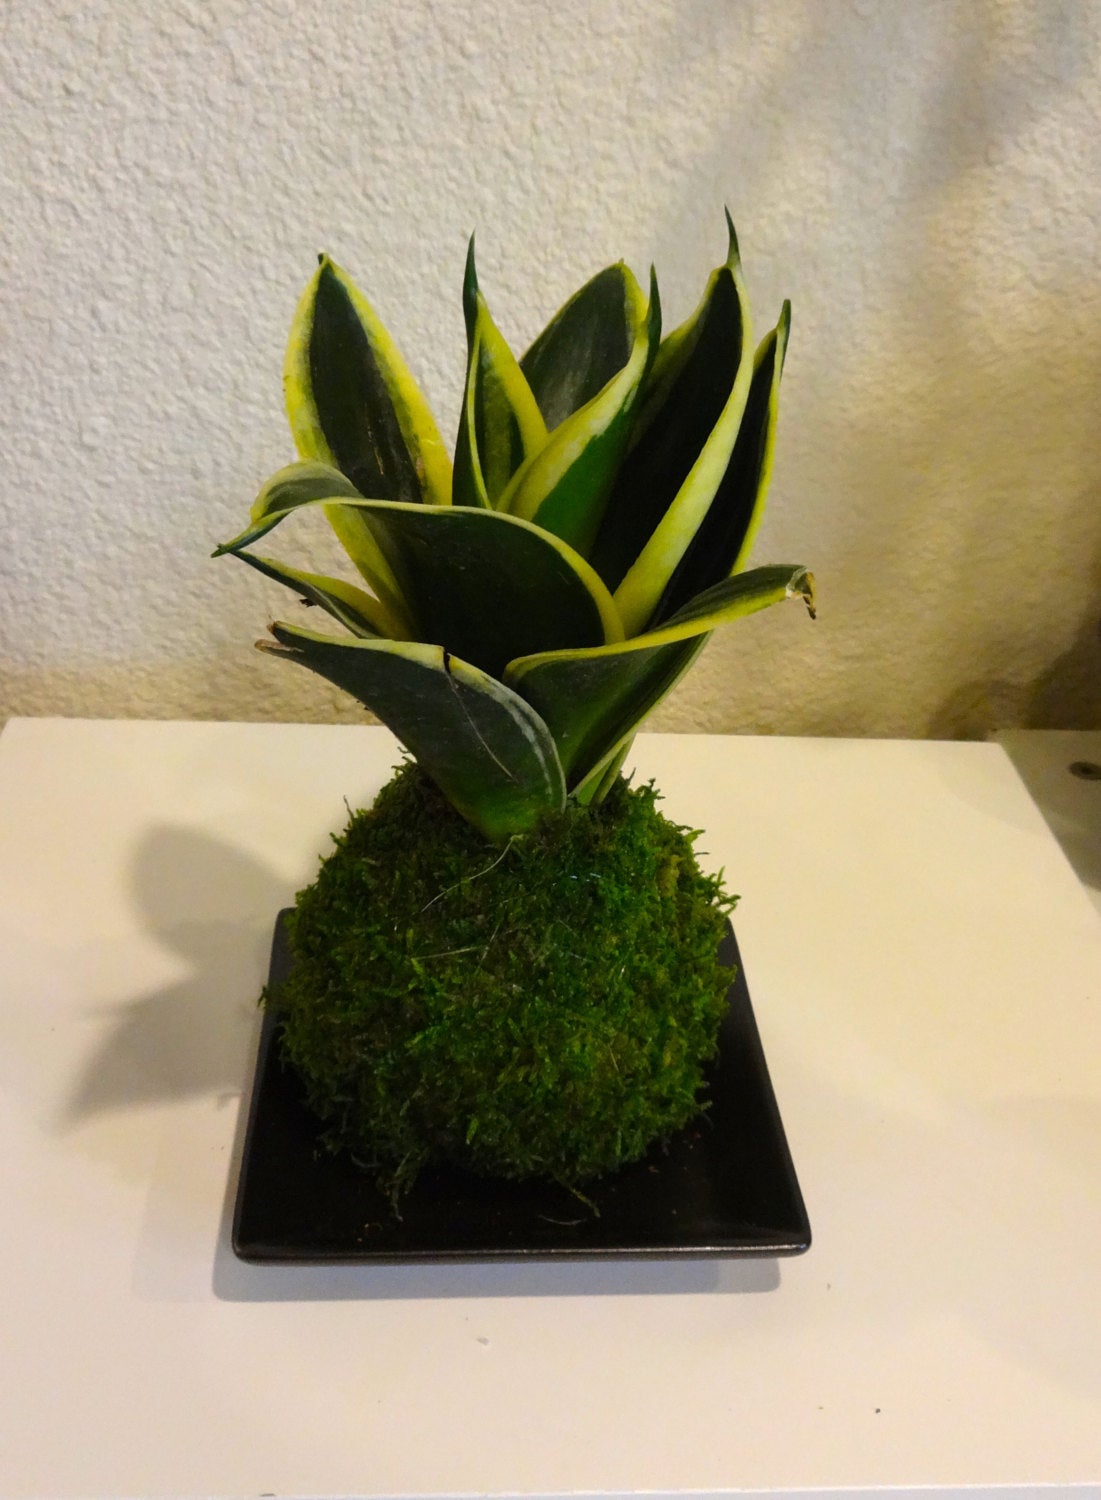 Sansevieria Kokedama - Best houseplant to improve indoor air quality. Drought tolerant plant!